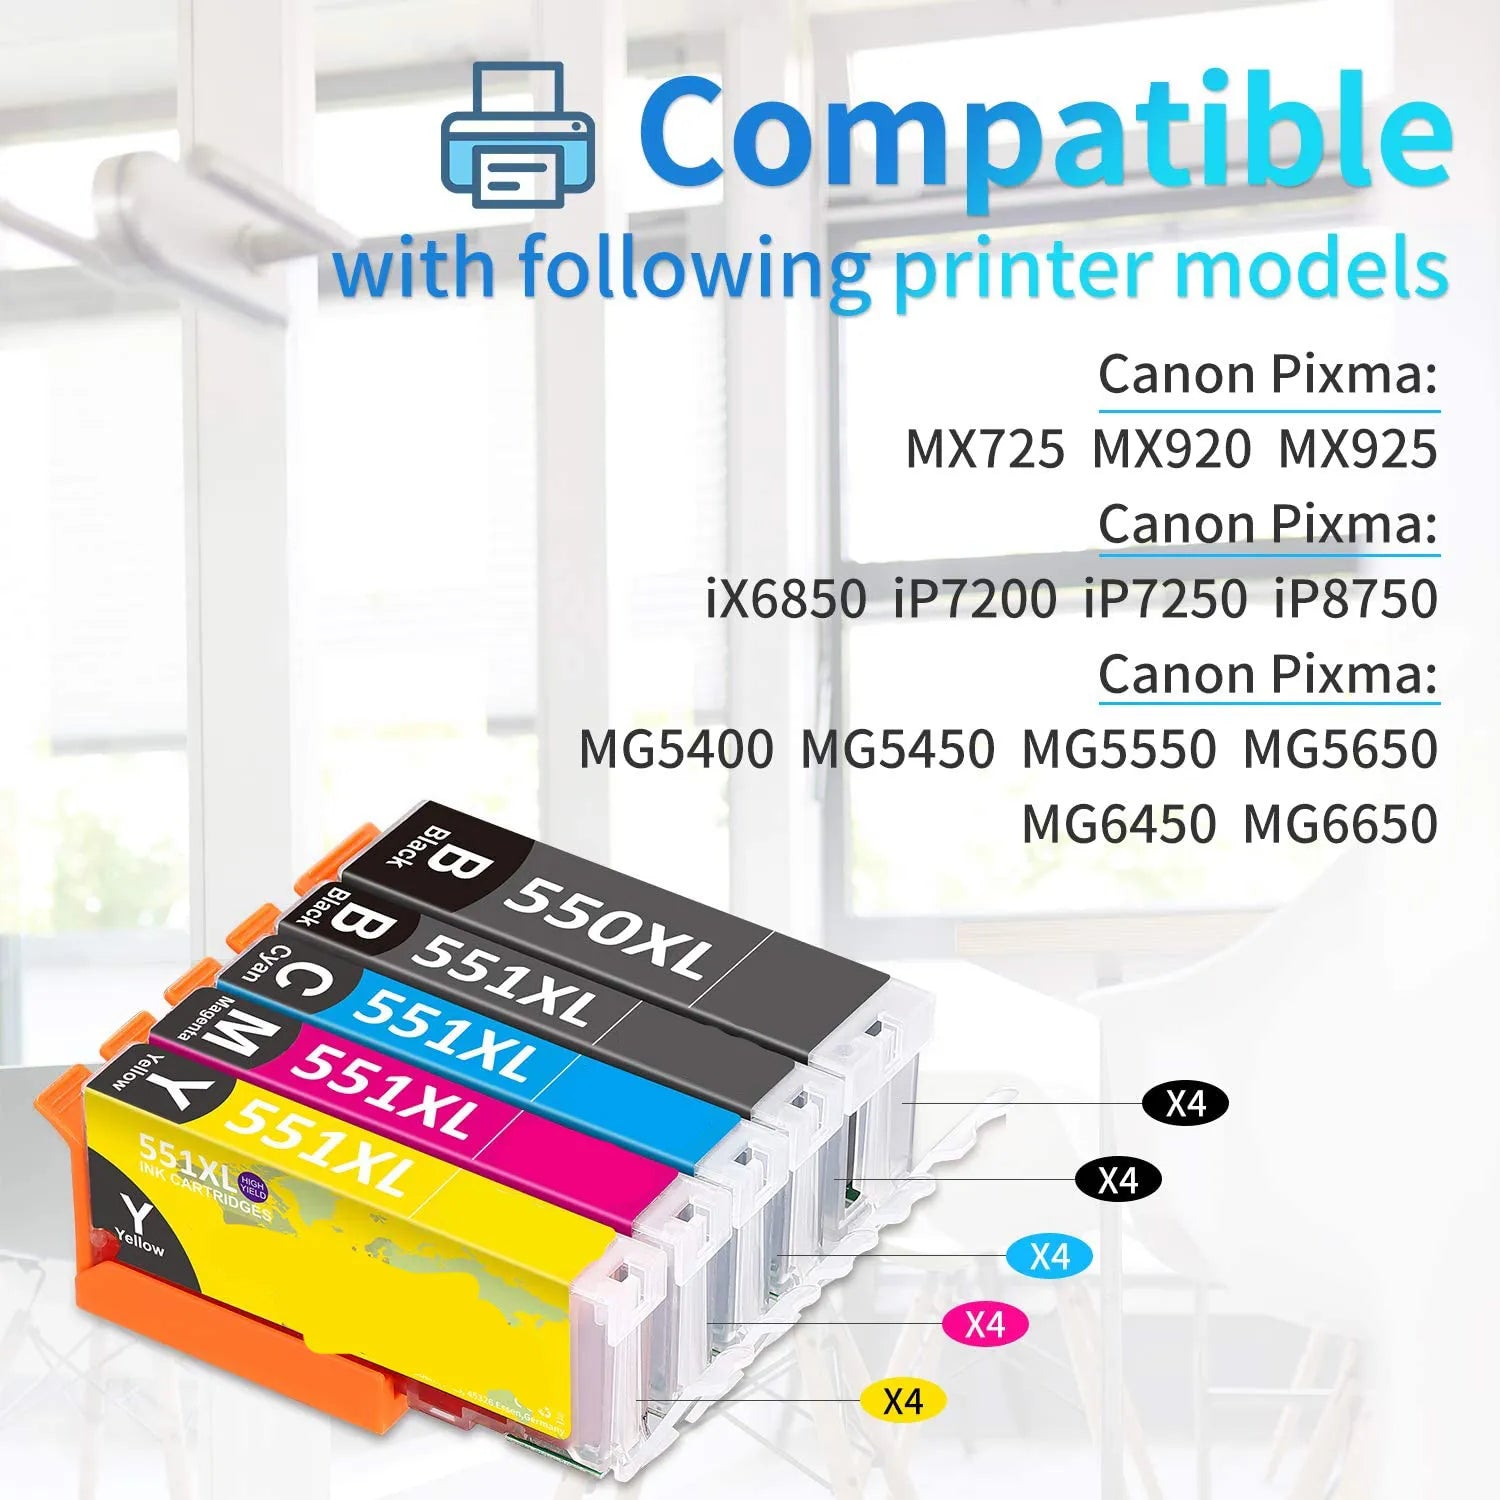 befon 550XL 551XL Replacement for Canon PGI-550 CLI-551 Ink Cartridges Compatible for PIXMA IP7250 IP8750 MX925 MG5650 IX6850